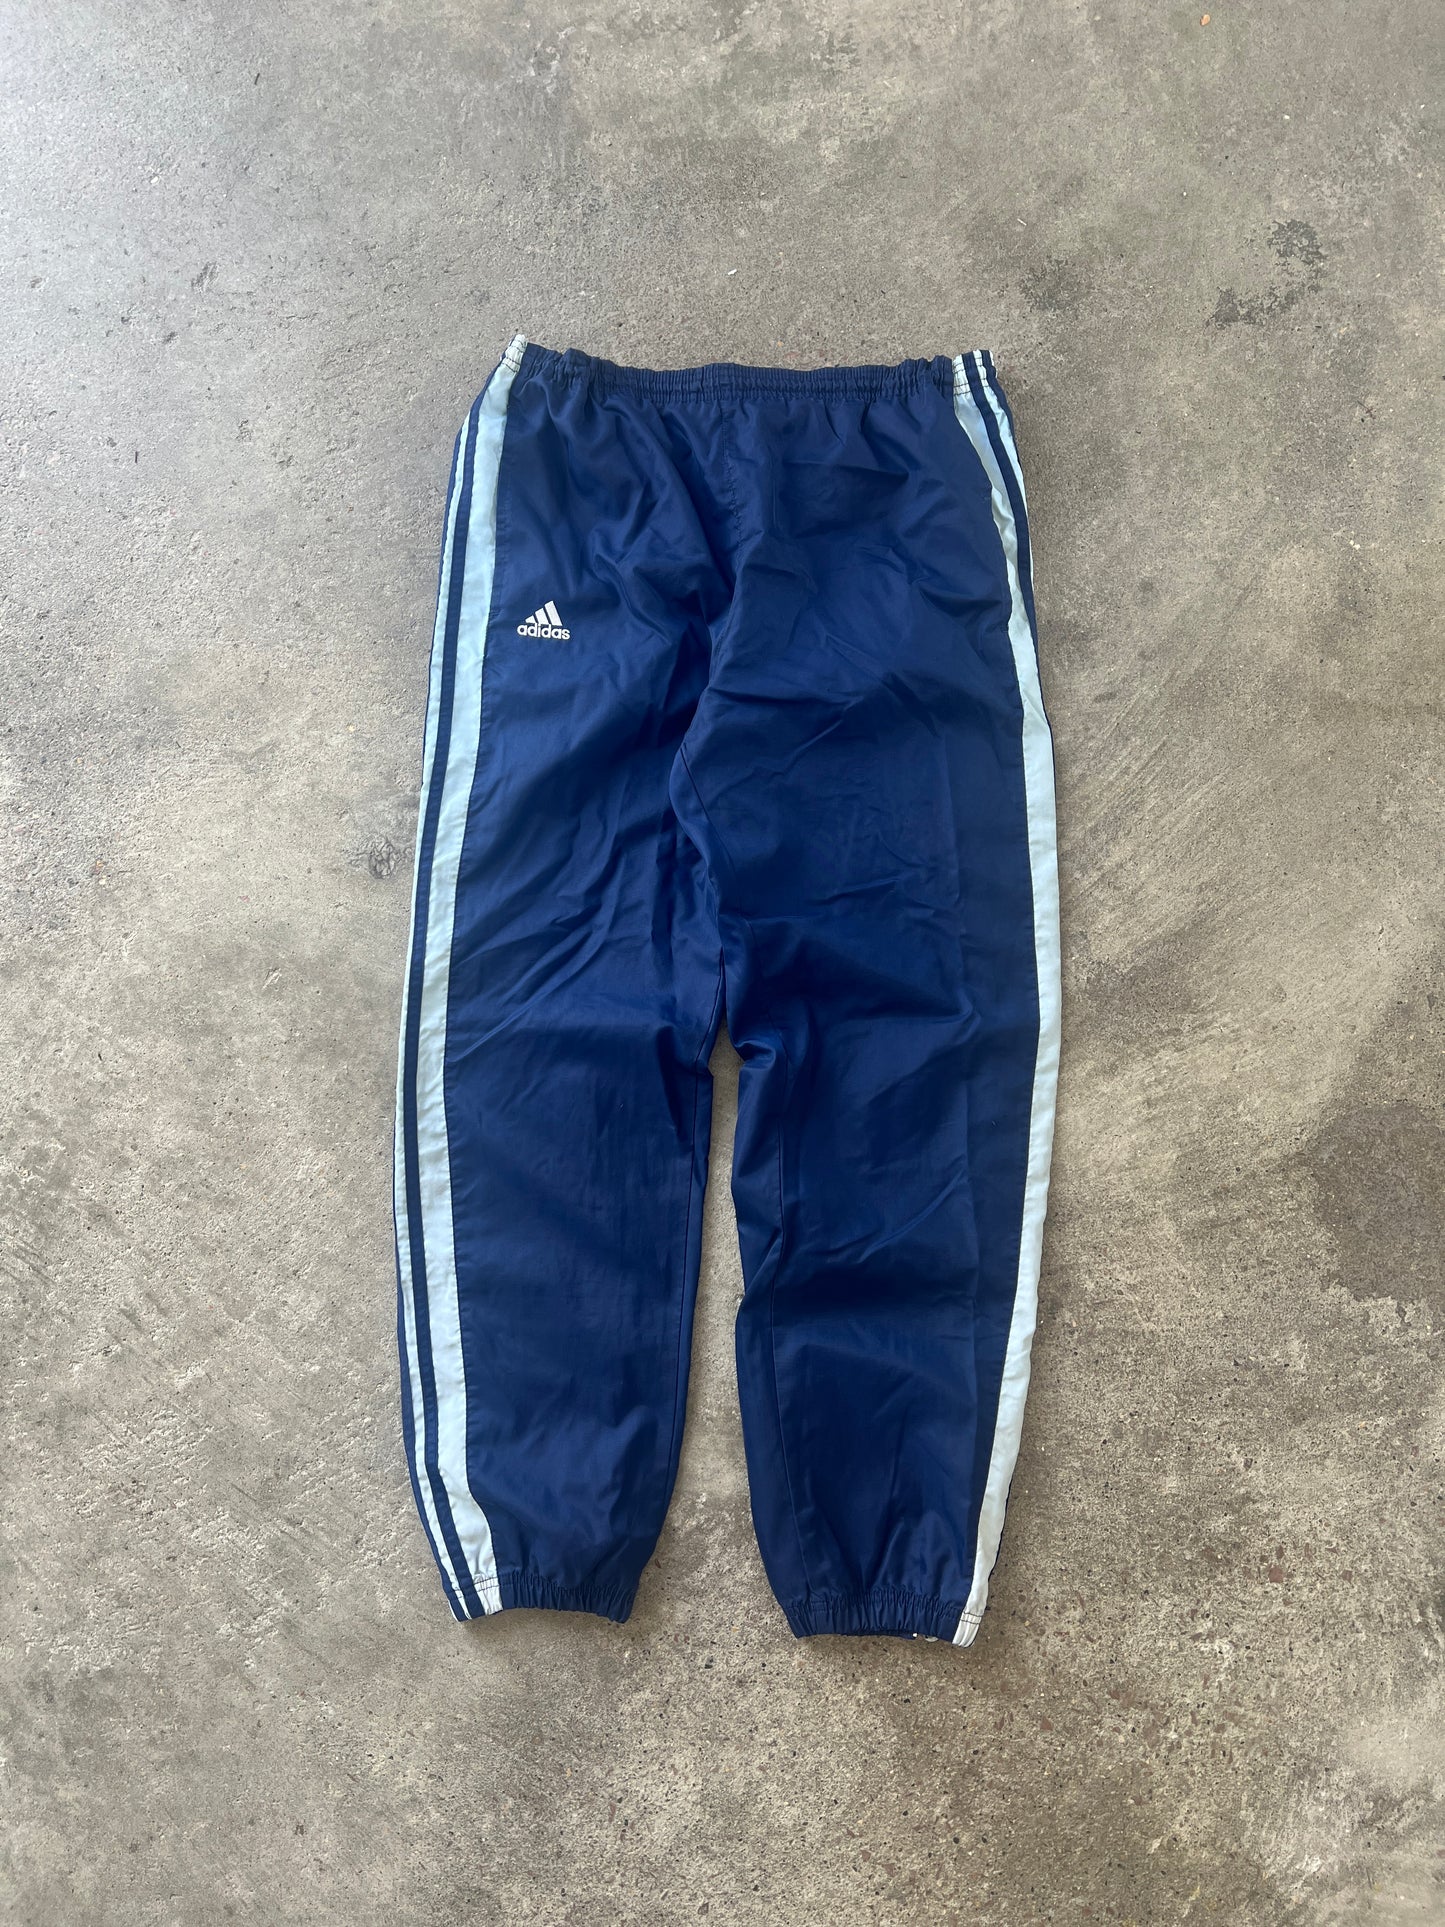 Vintage Stripped Adidas Track Pants - M